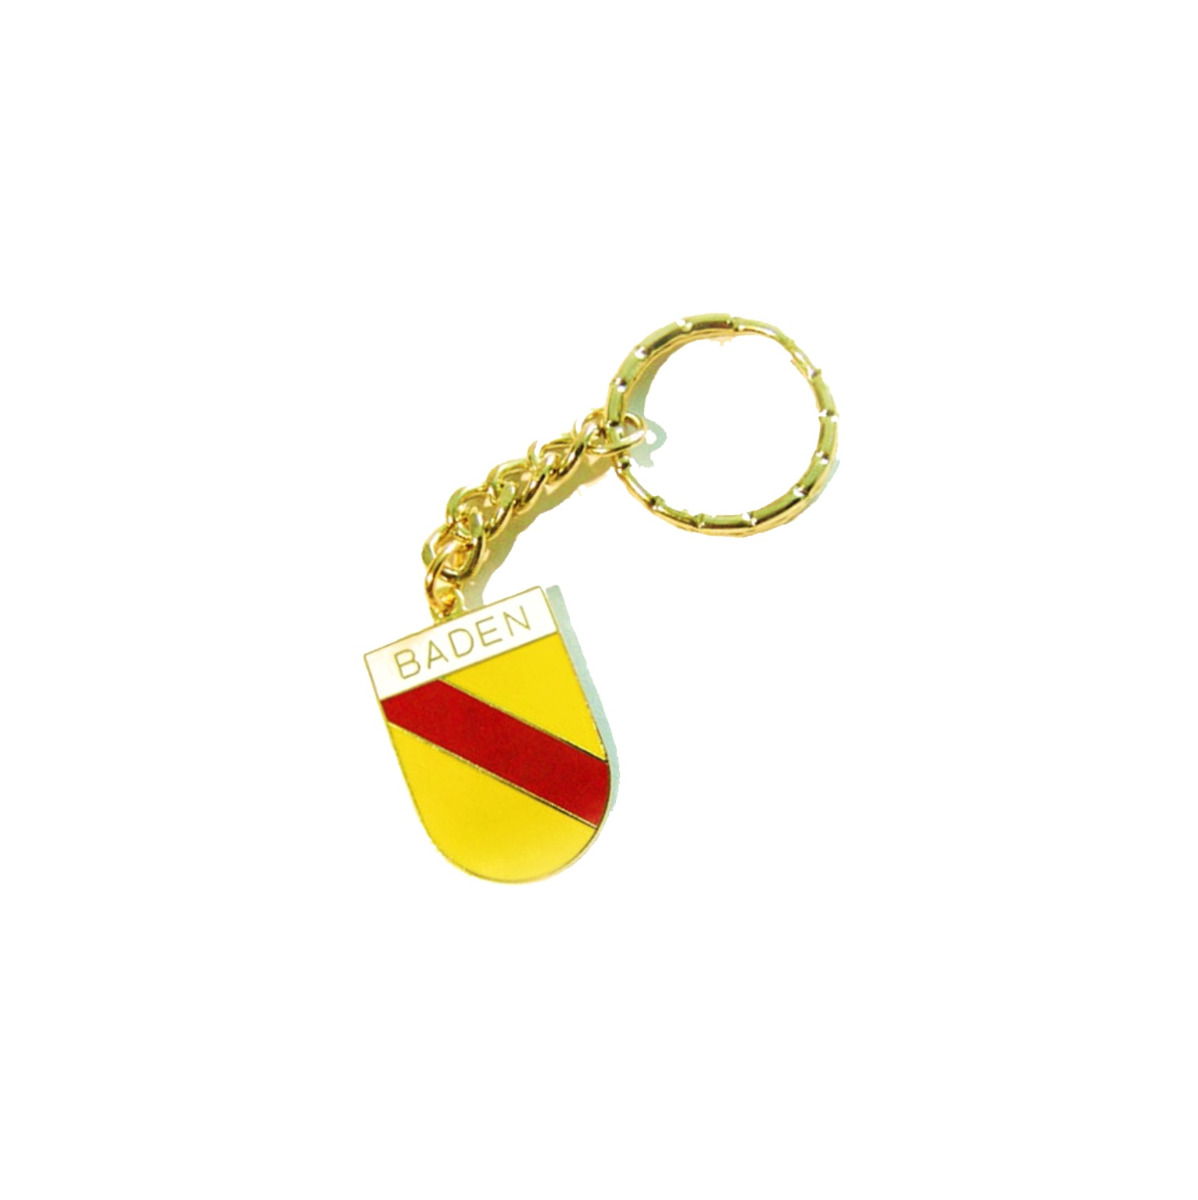 Baden Fanartikel - Schlüsselanhänger Baden (Wappen)